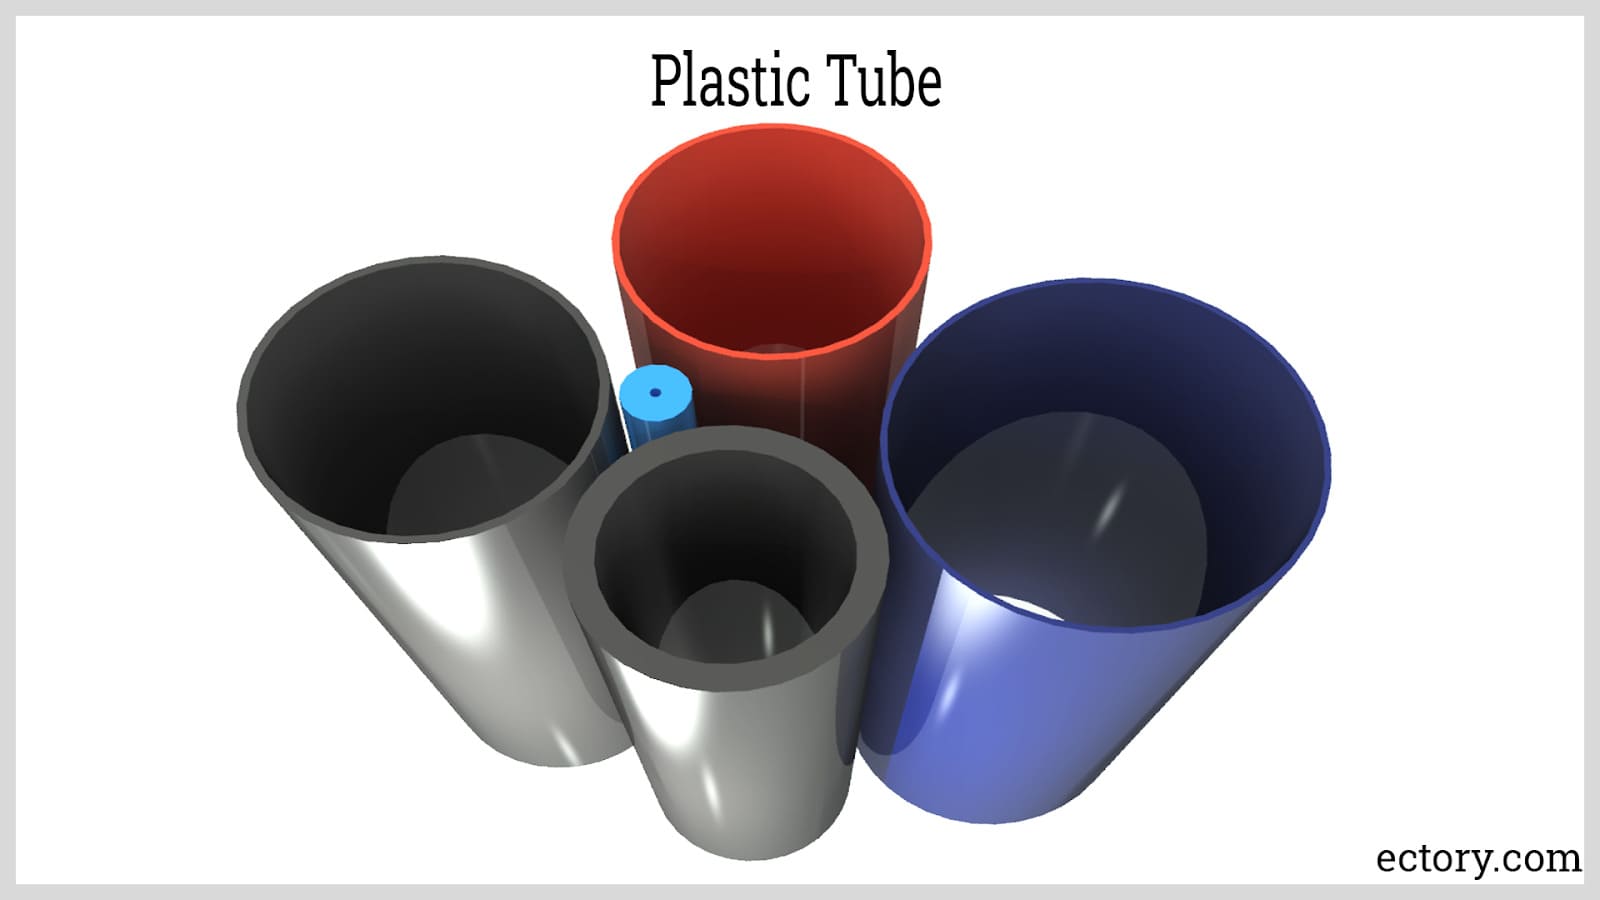 Plastic Tube